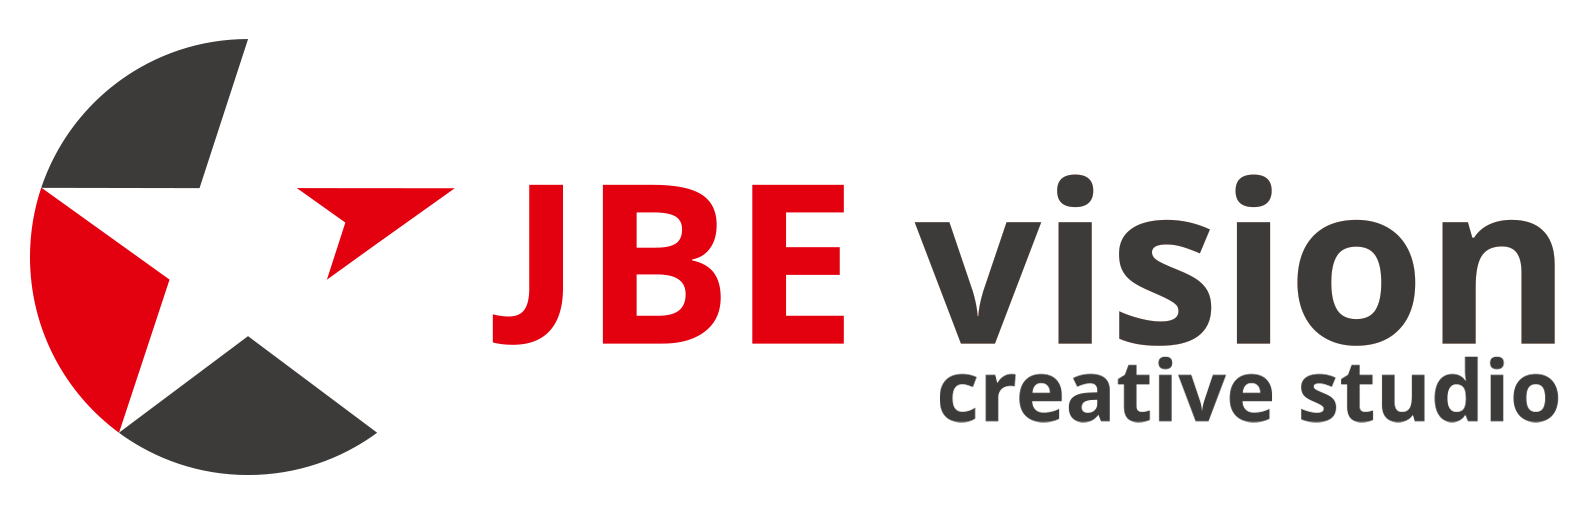 JBE vision logo